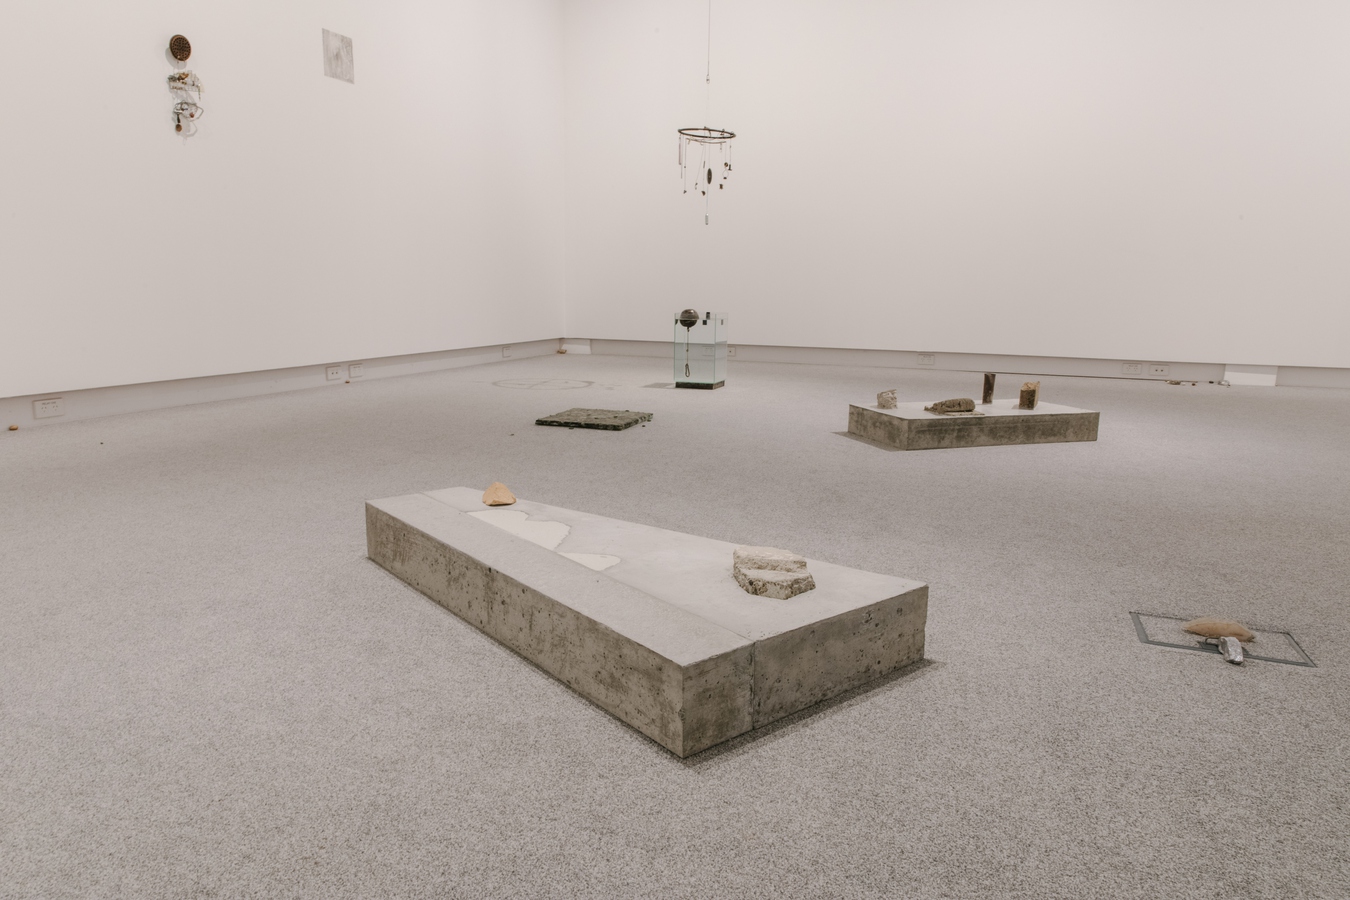 Image: Sam Towse, Speckled skin, loose stones (installation view), 2022. Concrete, steel, polystyrene, rocks, bricks and concrete detritus. Photo by Nancy Zhou.